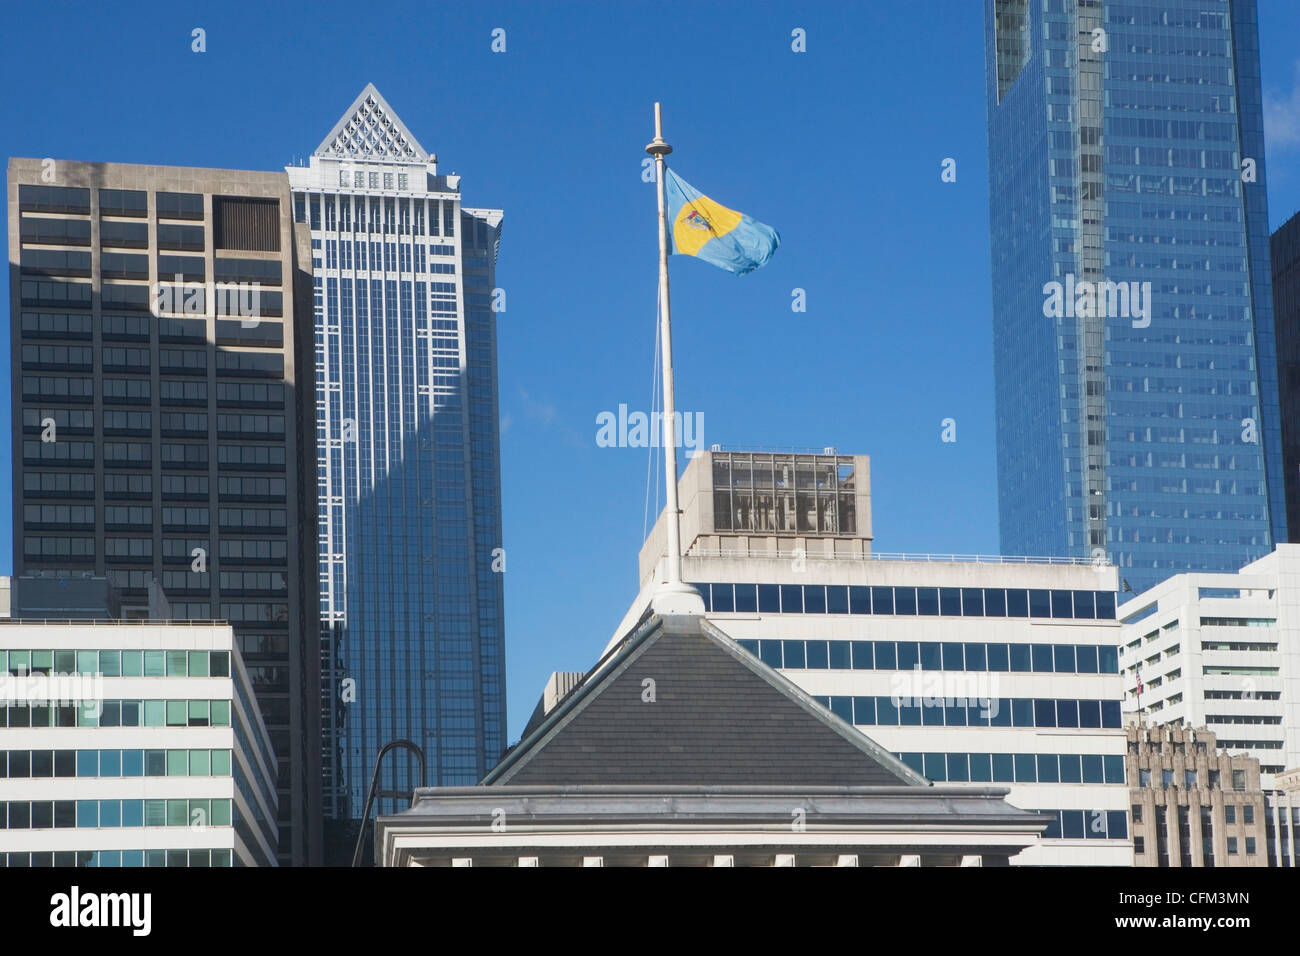 USA, Pennsylvania, Philadelphia, view of state flag on top of skyscraper Stock Photo